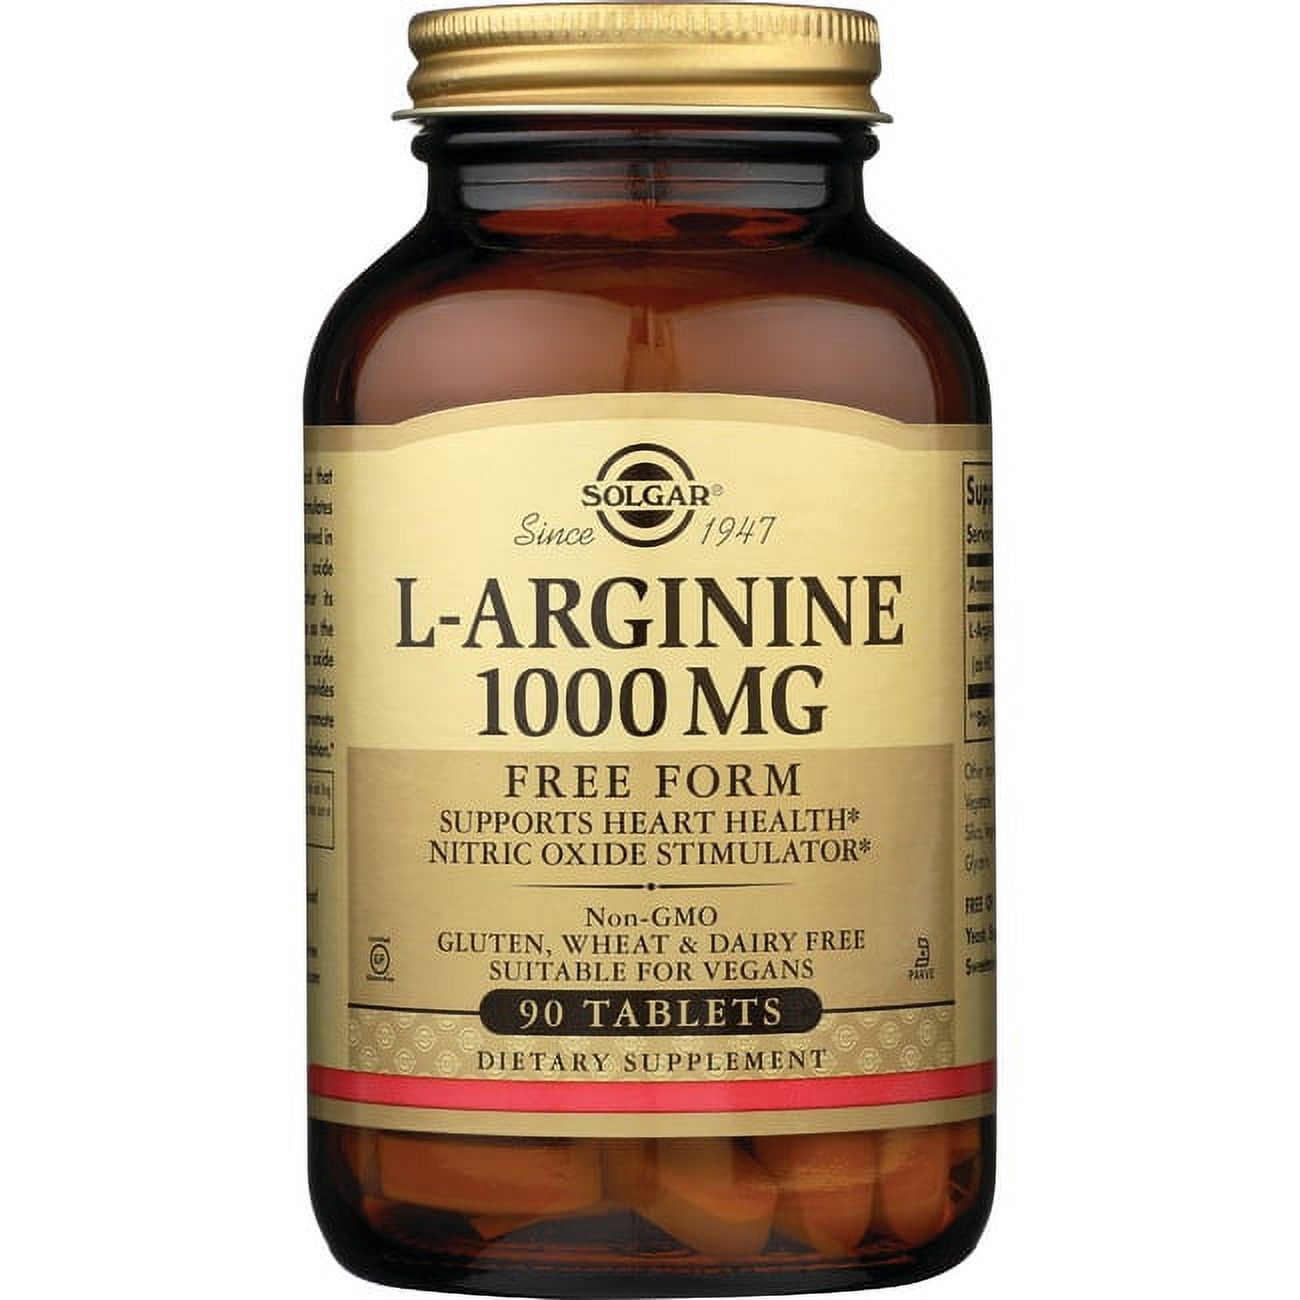 Solgar l-arginine 1000 mg tablets, 90 ct - image 1 of 2